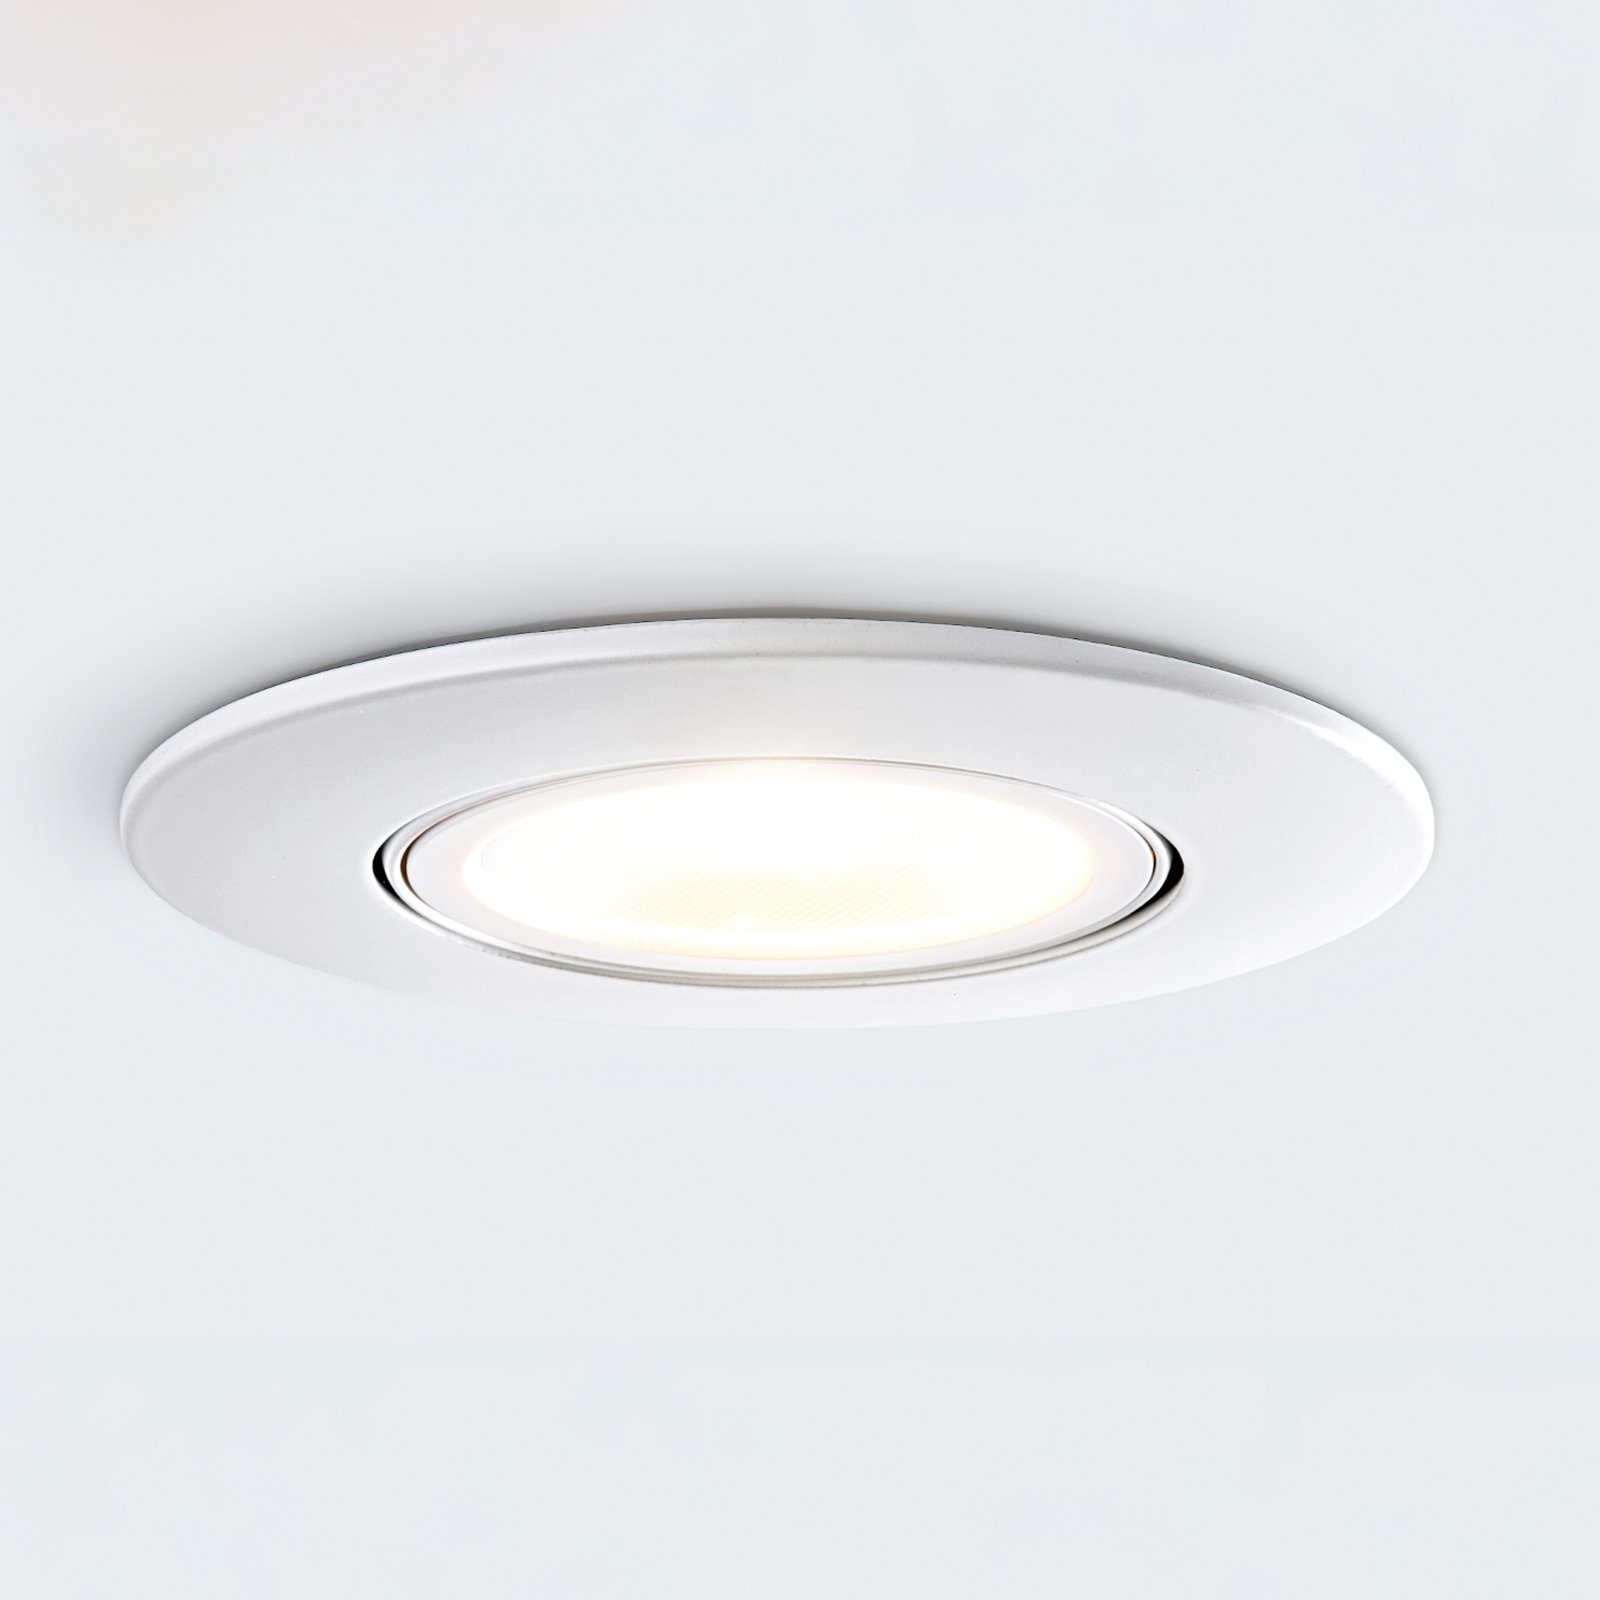 DL8002 LED downlight, pivotable, 38°